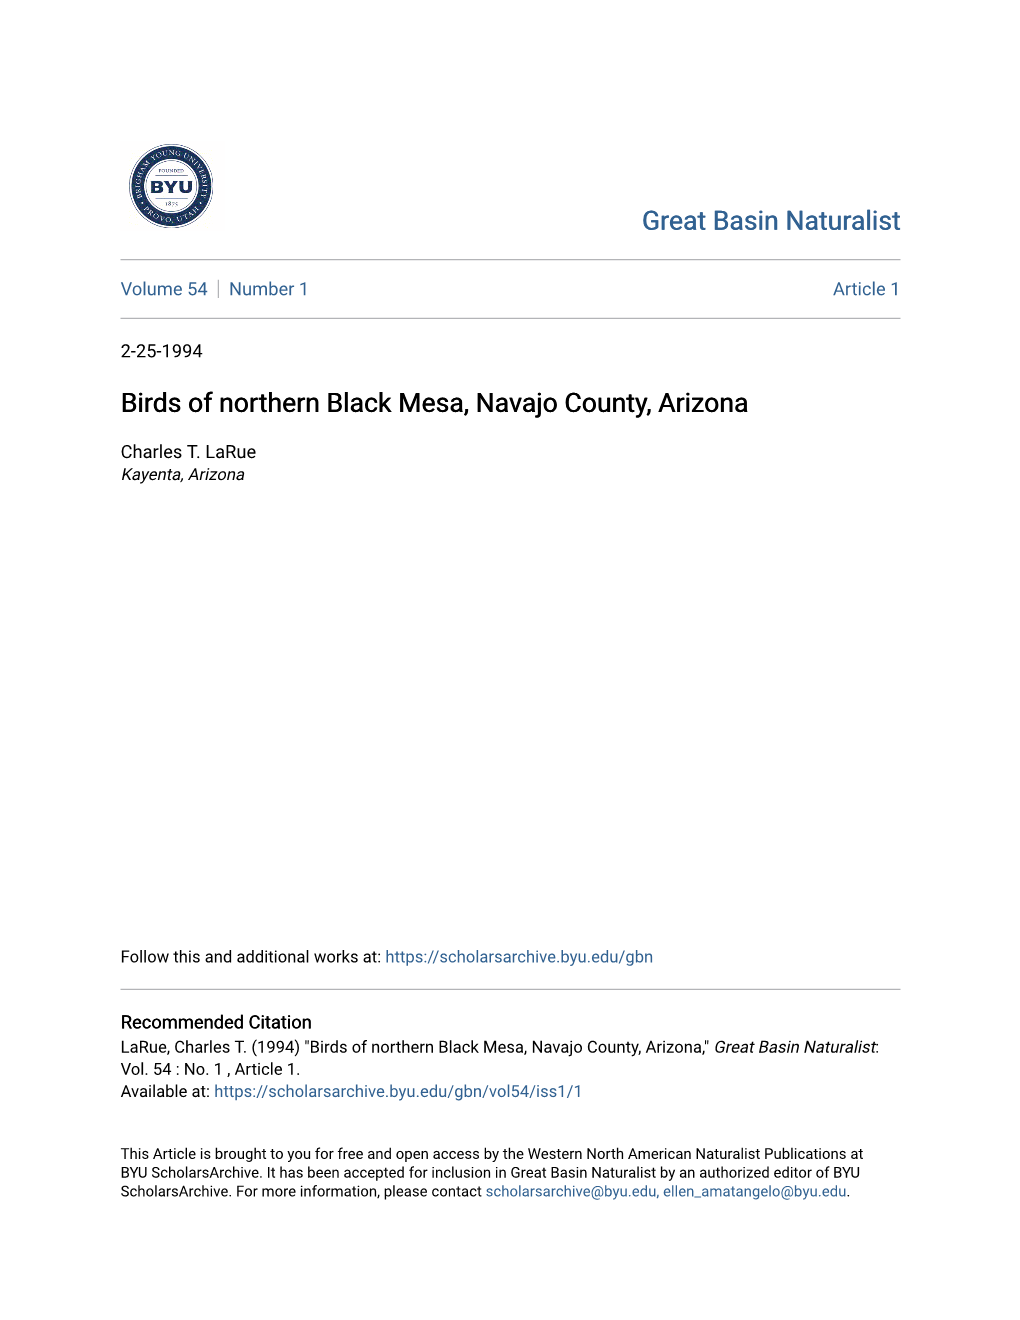 Birds of Northern Black Mesa, Navajo County, Arizona